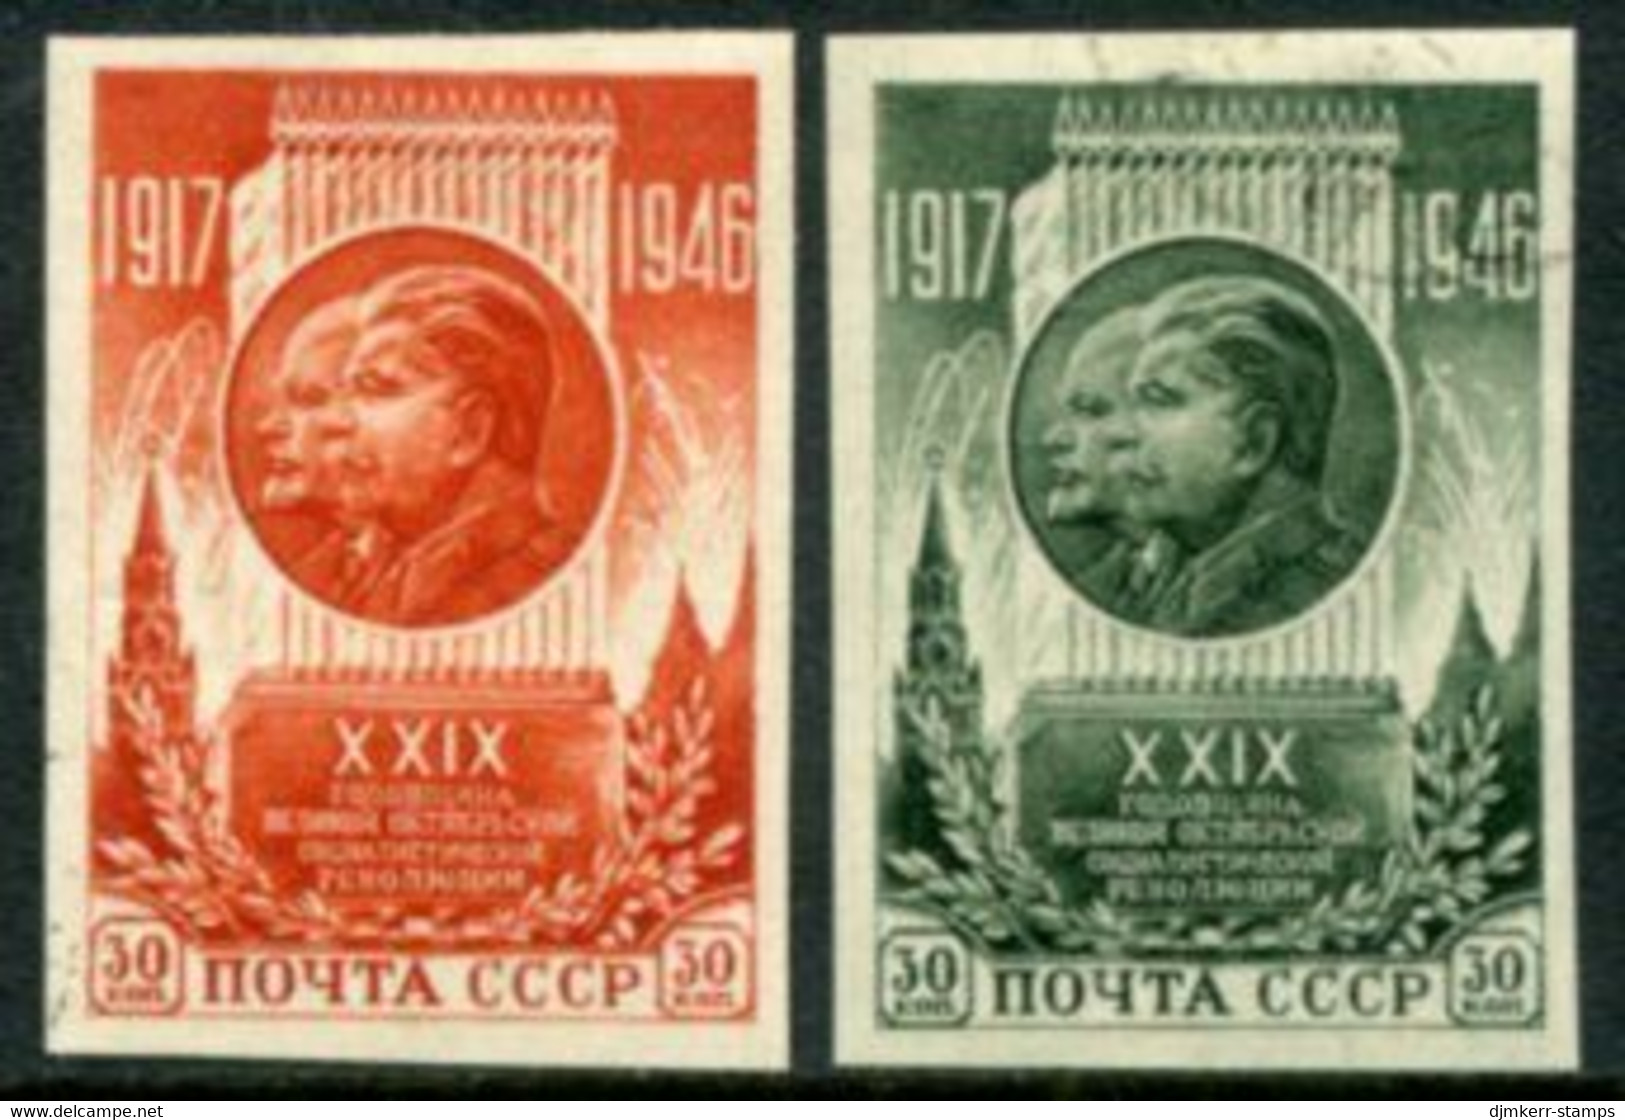 SOVIET UNION 1946 October Revolution Imperforate LHM / *  Michel 1074-75B - Neufs